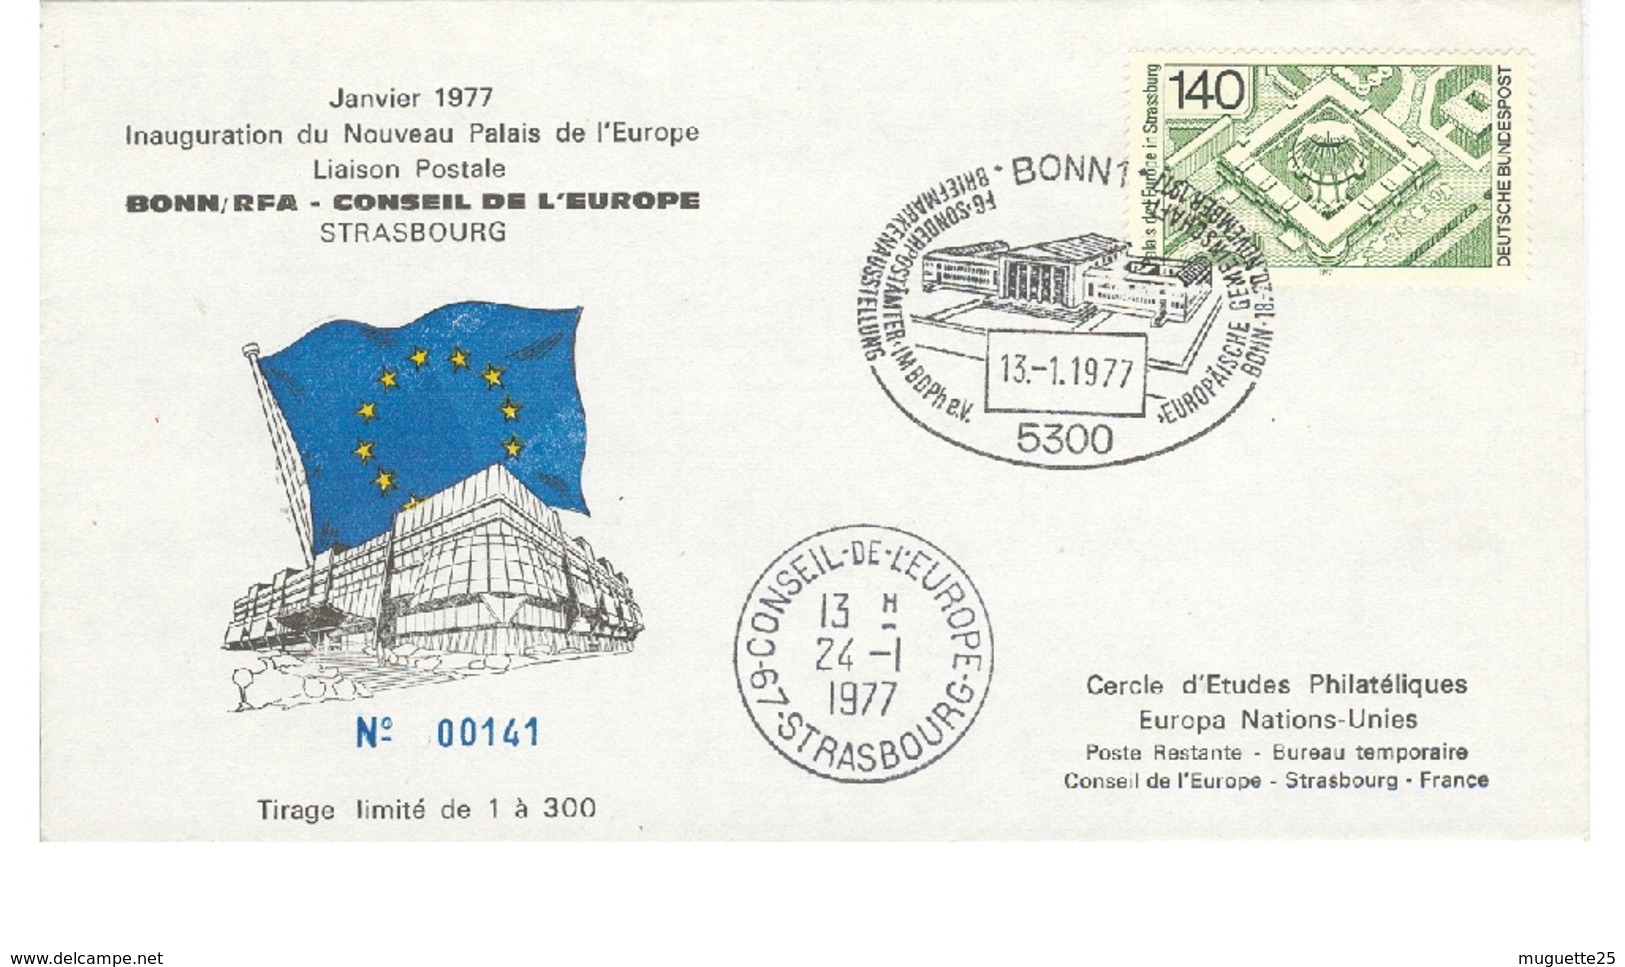 Inauguration Du Palais De L’Europe  STRASBOURG24-01-1977 - 1977